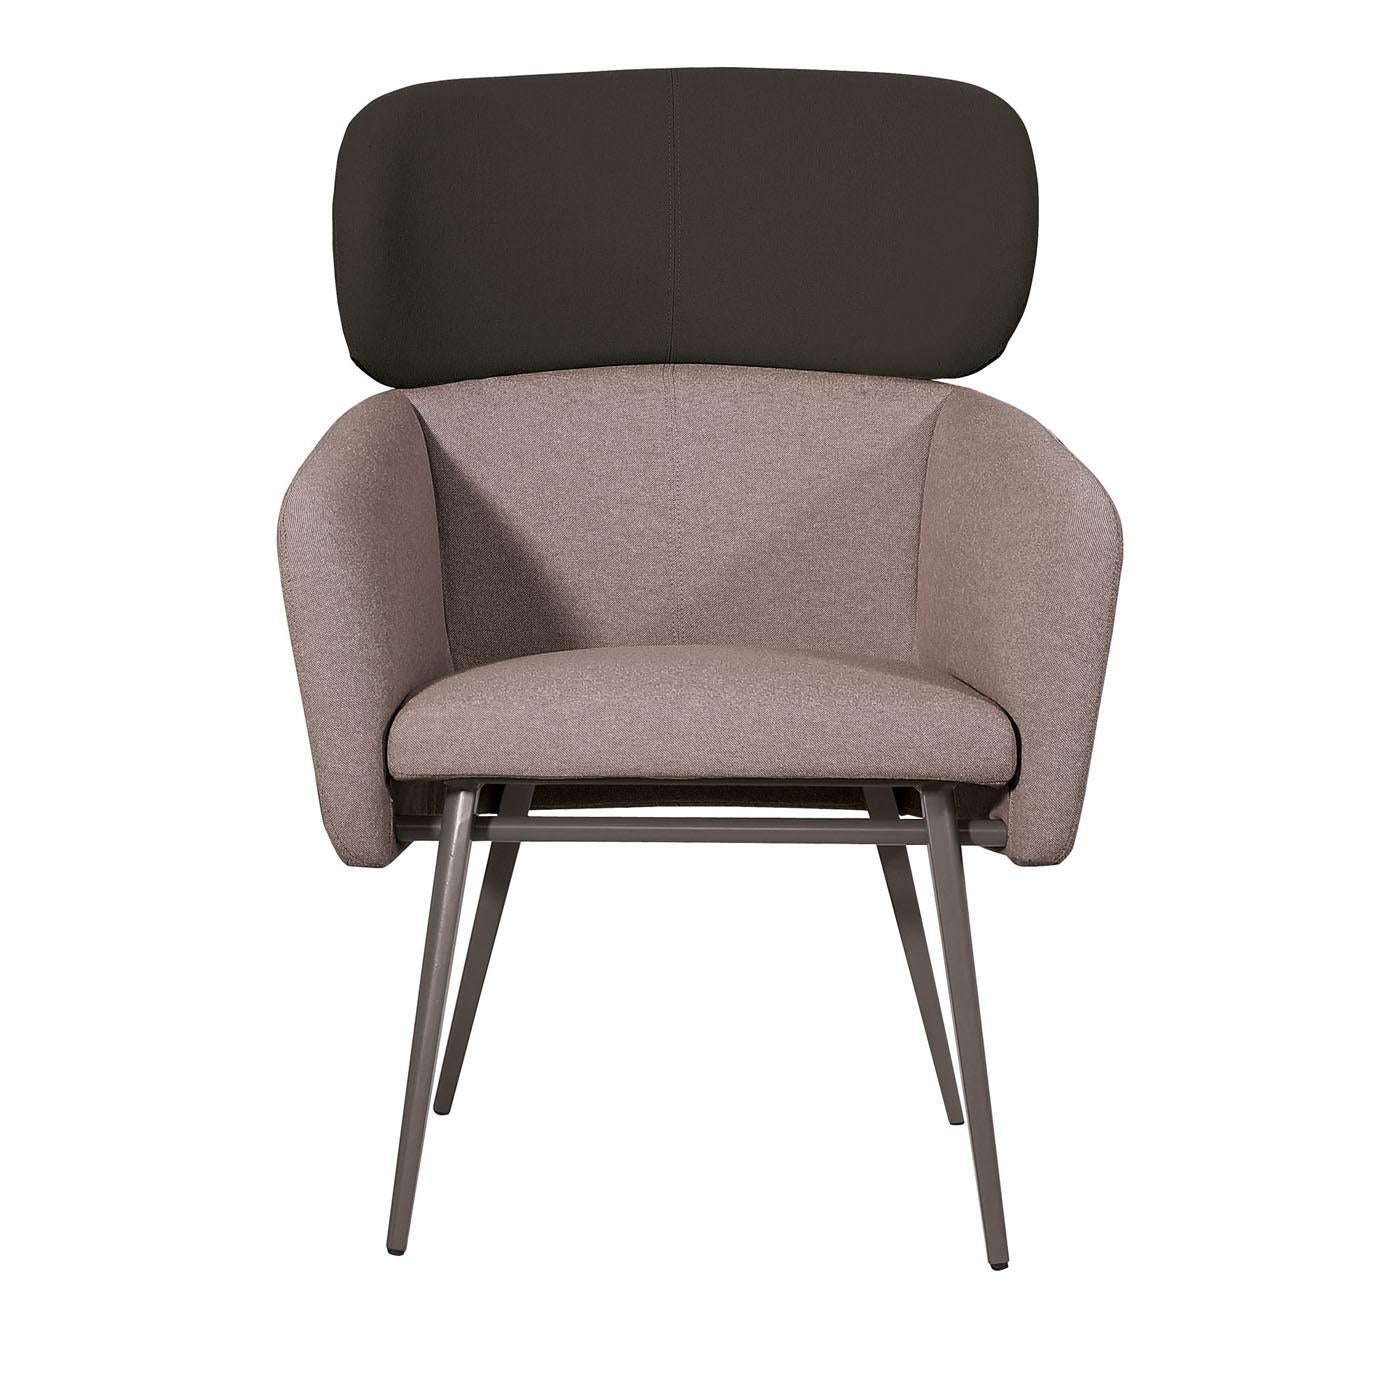 Italian Balù XL Met Gray and Black Chair by Emilio Nanni For Sale